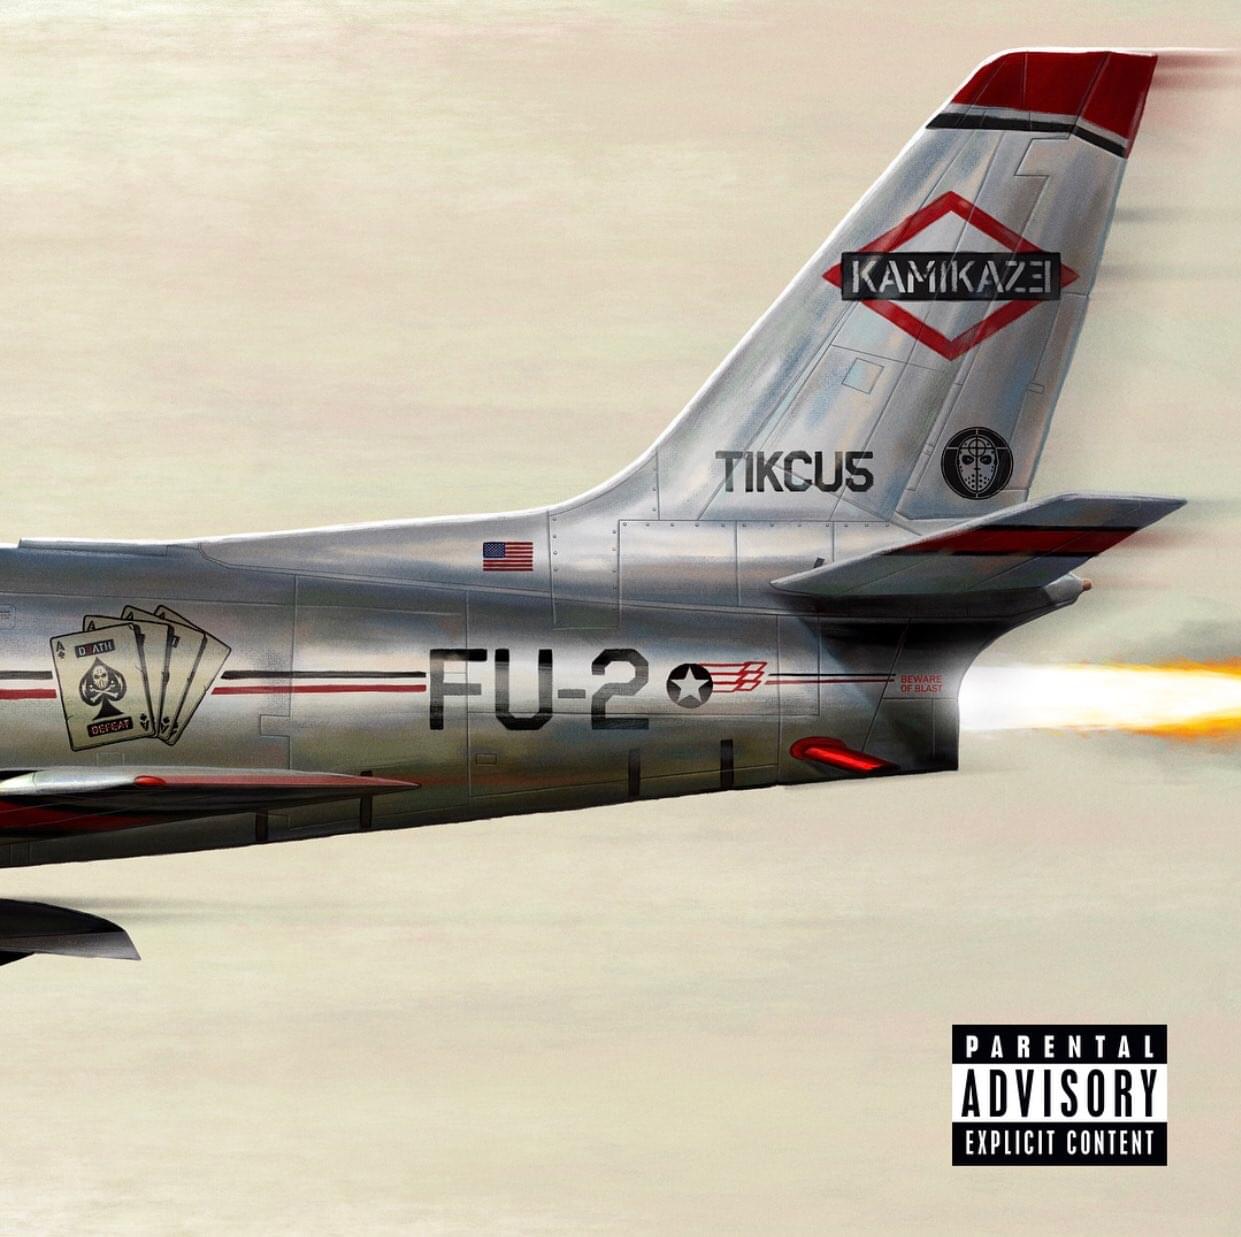 Eminem Surprises Fans With His New Album “Kamikaze” [STREAM]